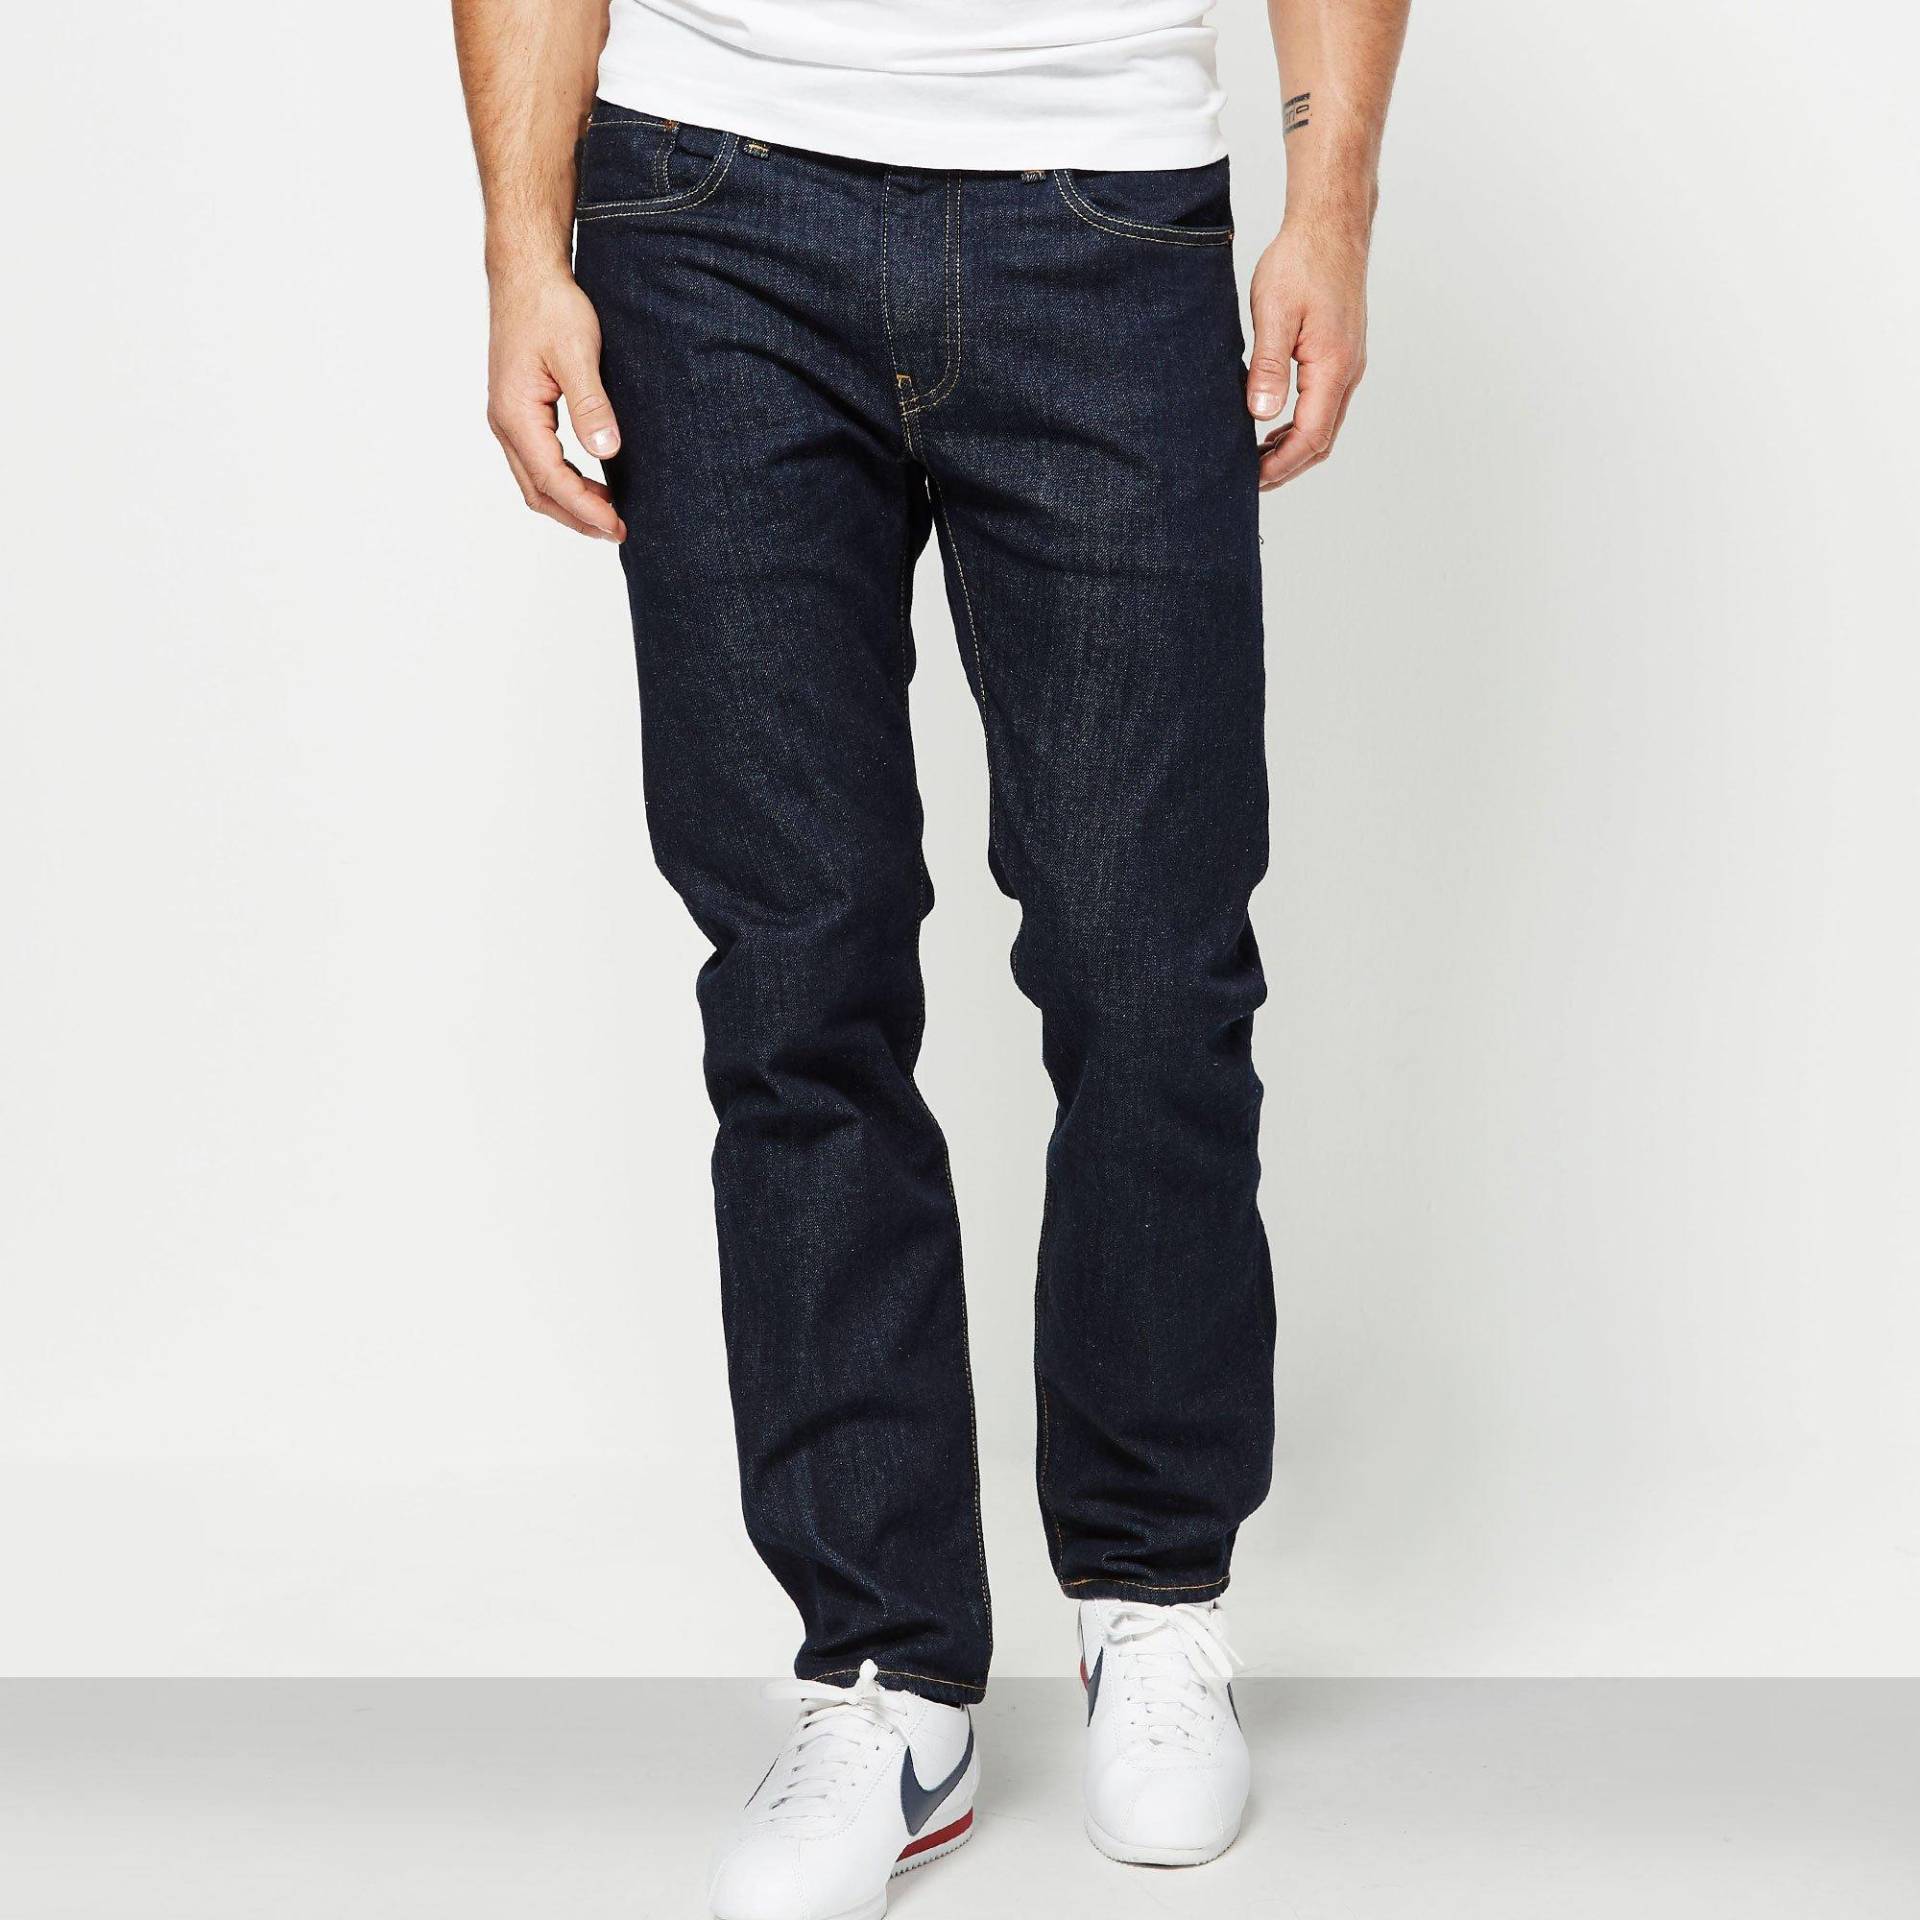 Jeans, Straight Leg Fit Herren Blau Denim Dunkel L30/W32 von Levi's®